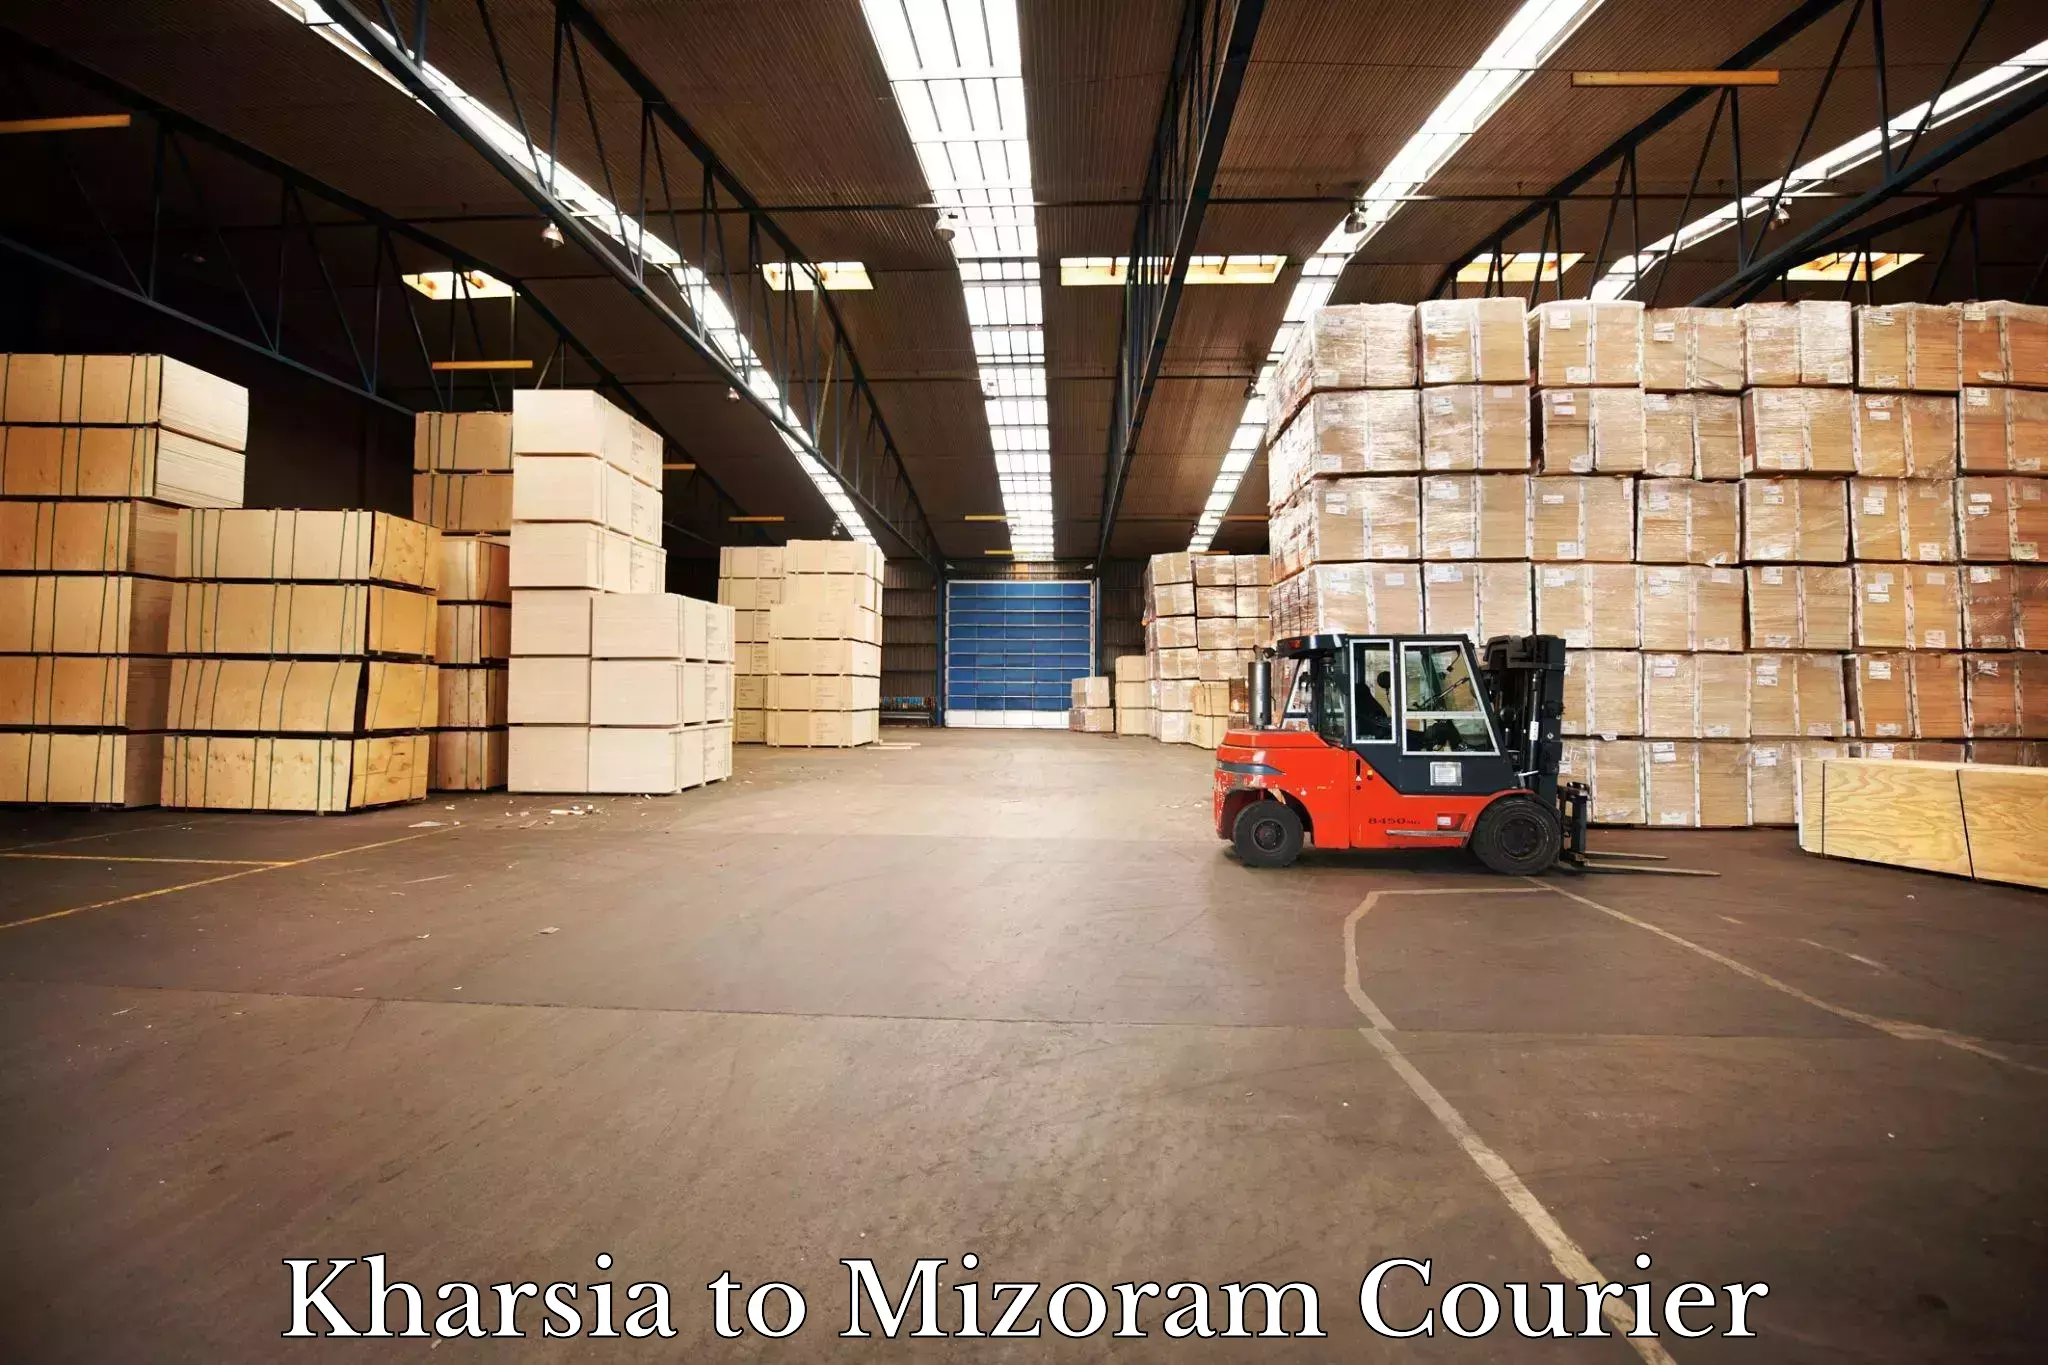 International courier networks Kharsia to Mizoram